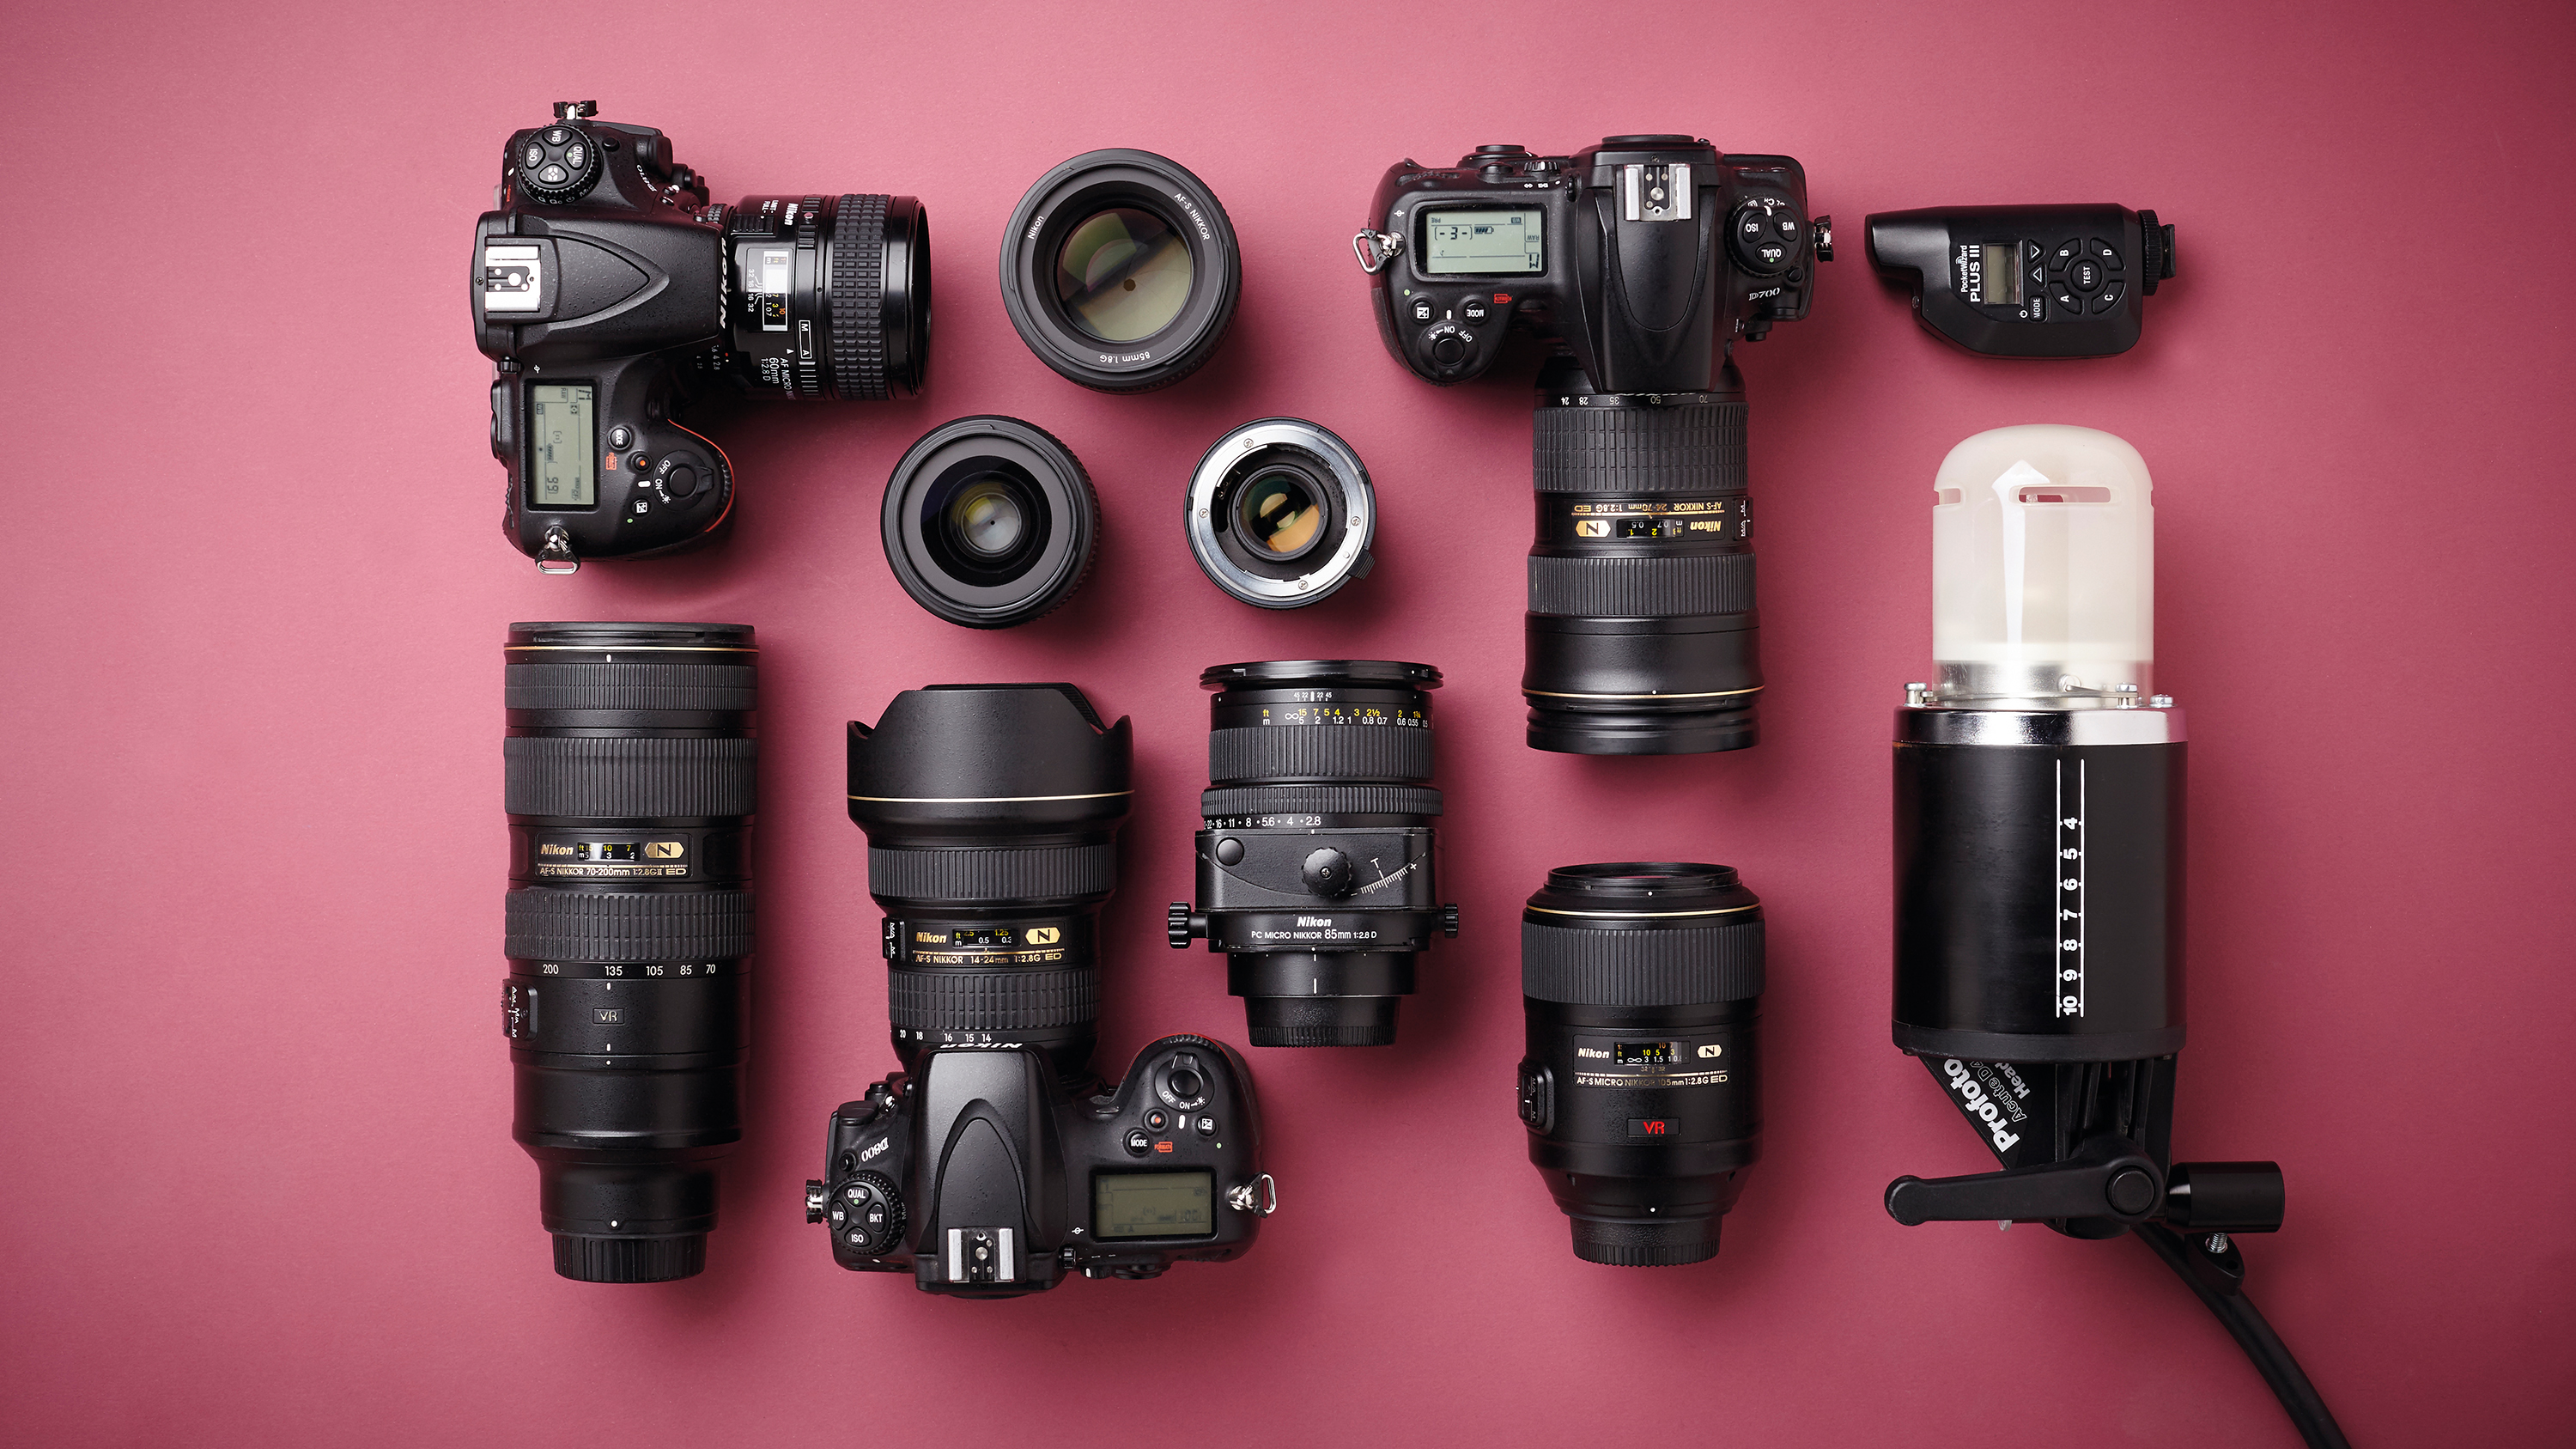 10 essential accessories for your new camera | TechRadar